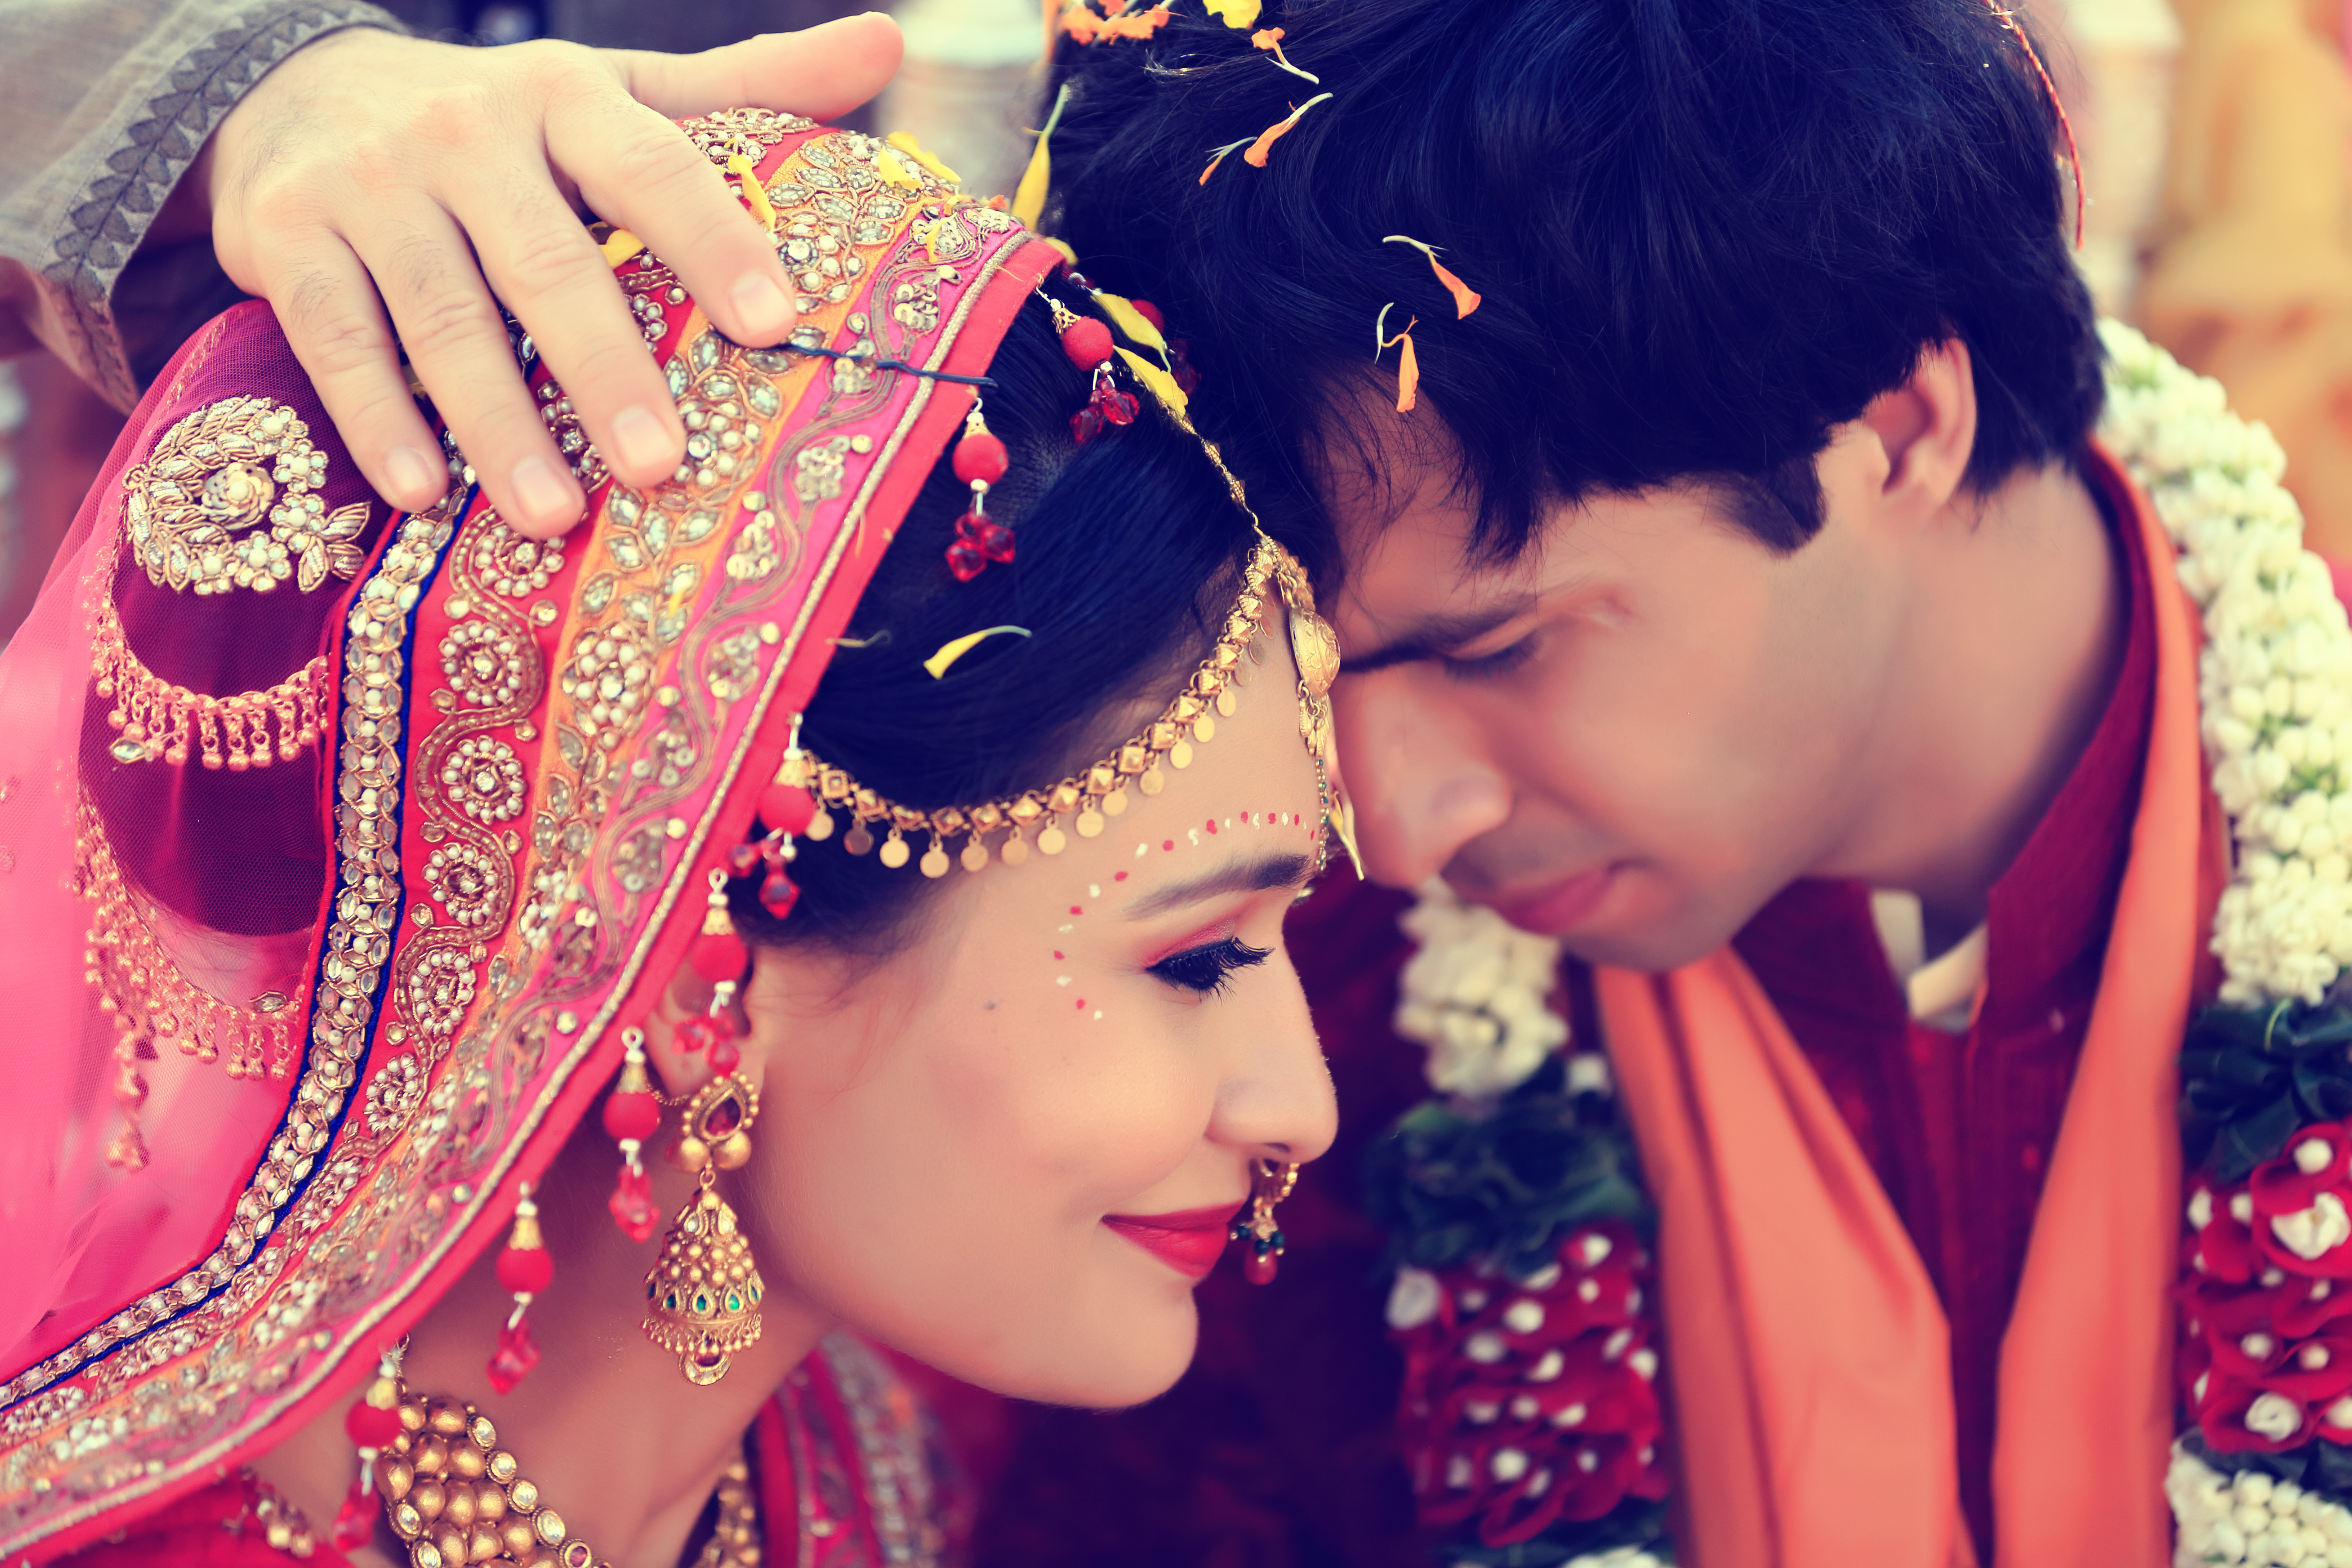 Dpp07dd0302090c52 - Cute Indian Married Couple - 5760x3840 Wallpaper -  